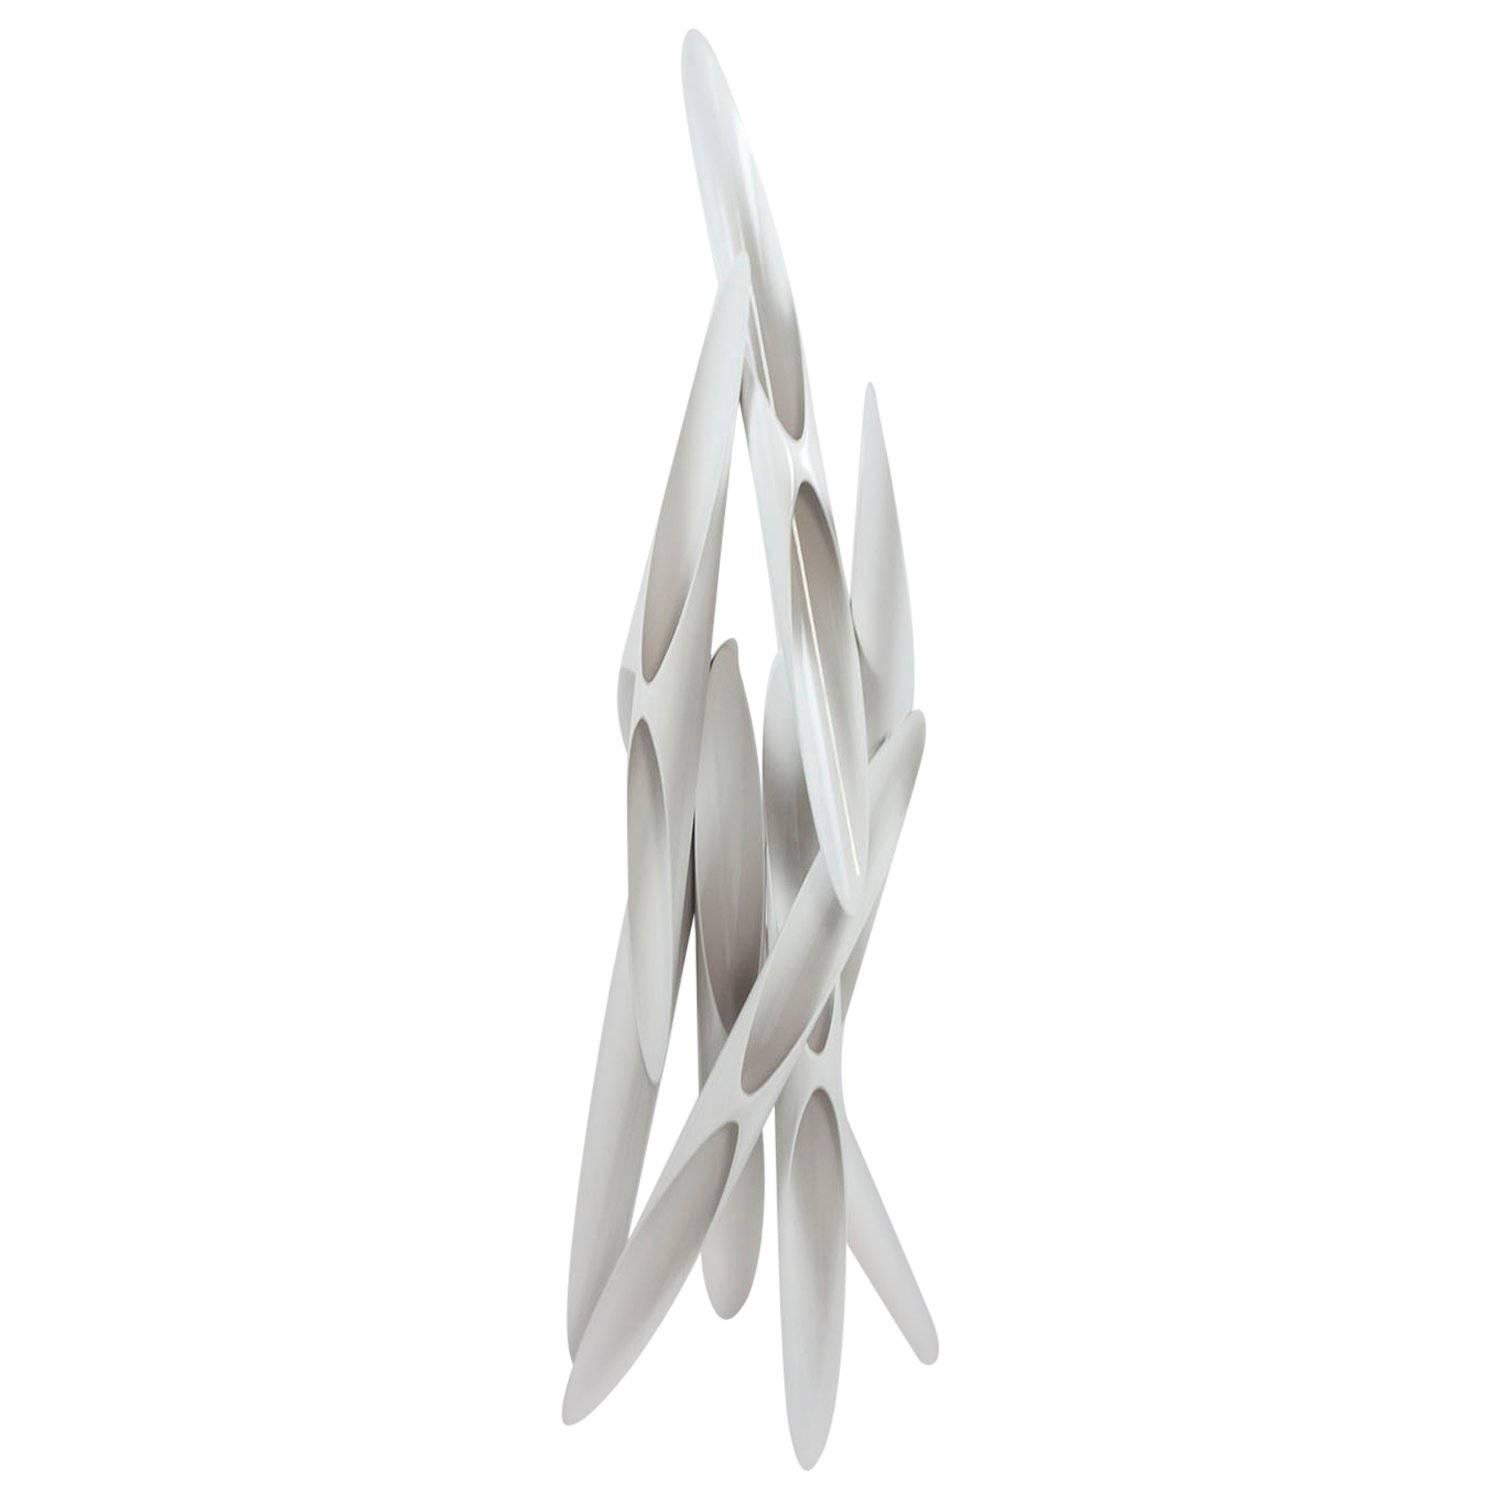 Iconic Alexander Liberman Lacquered Aluminium Sculpture "Aim" For Sale